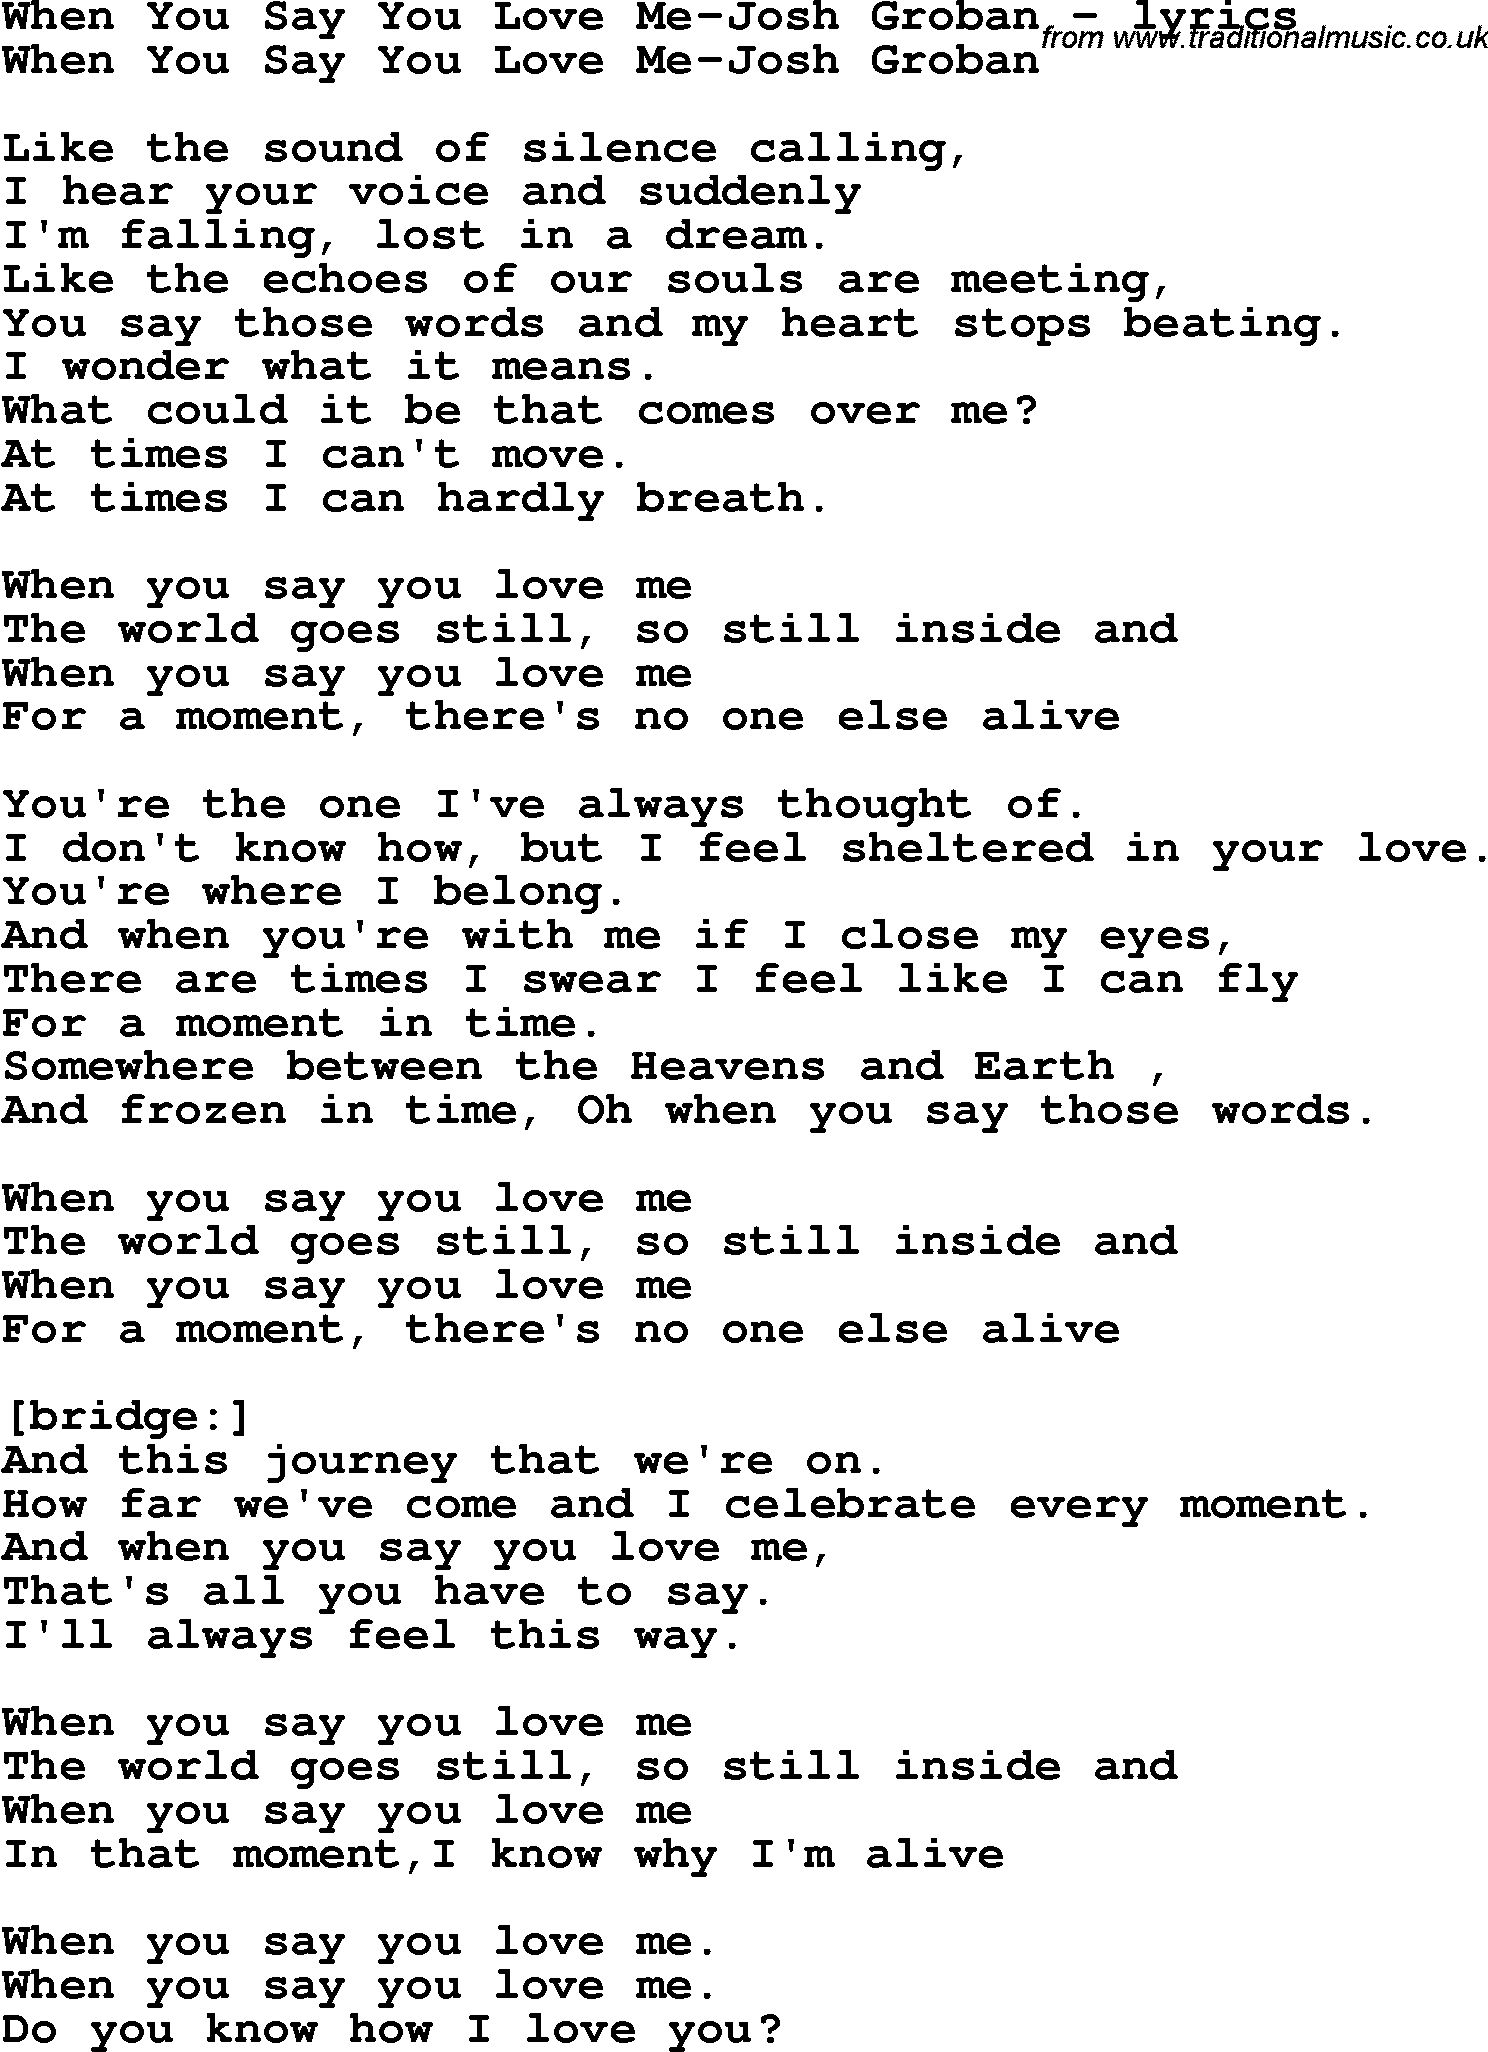 Love Song Lyrics for: When You Say You Love Me-Josh Groban